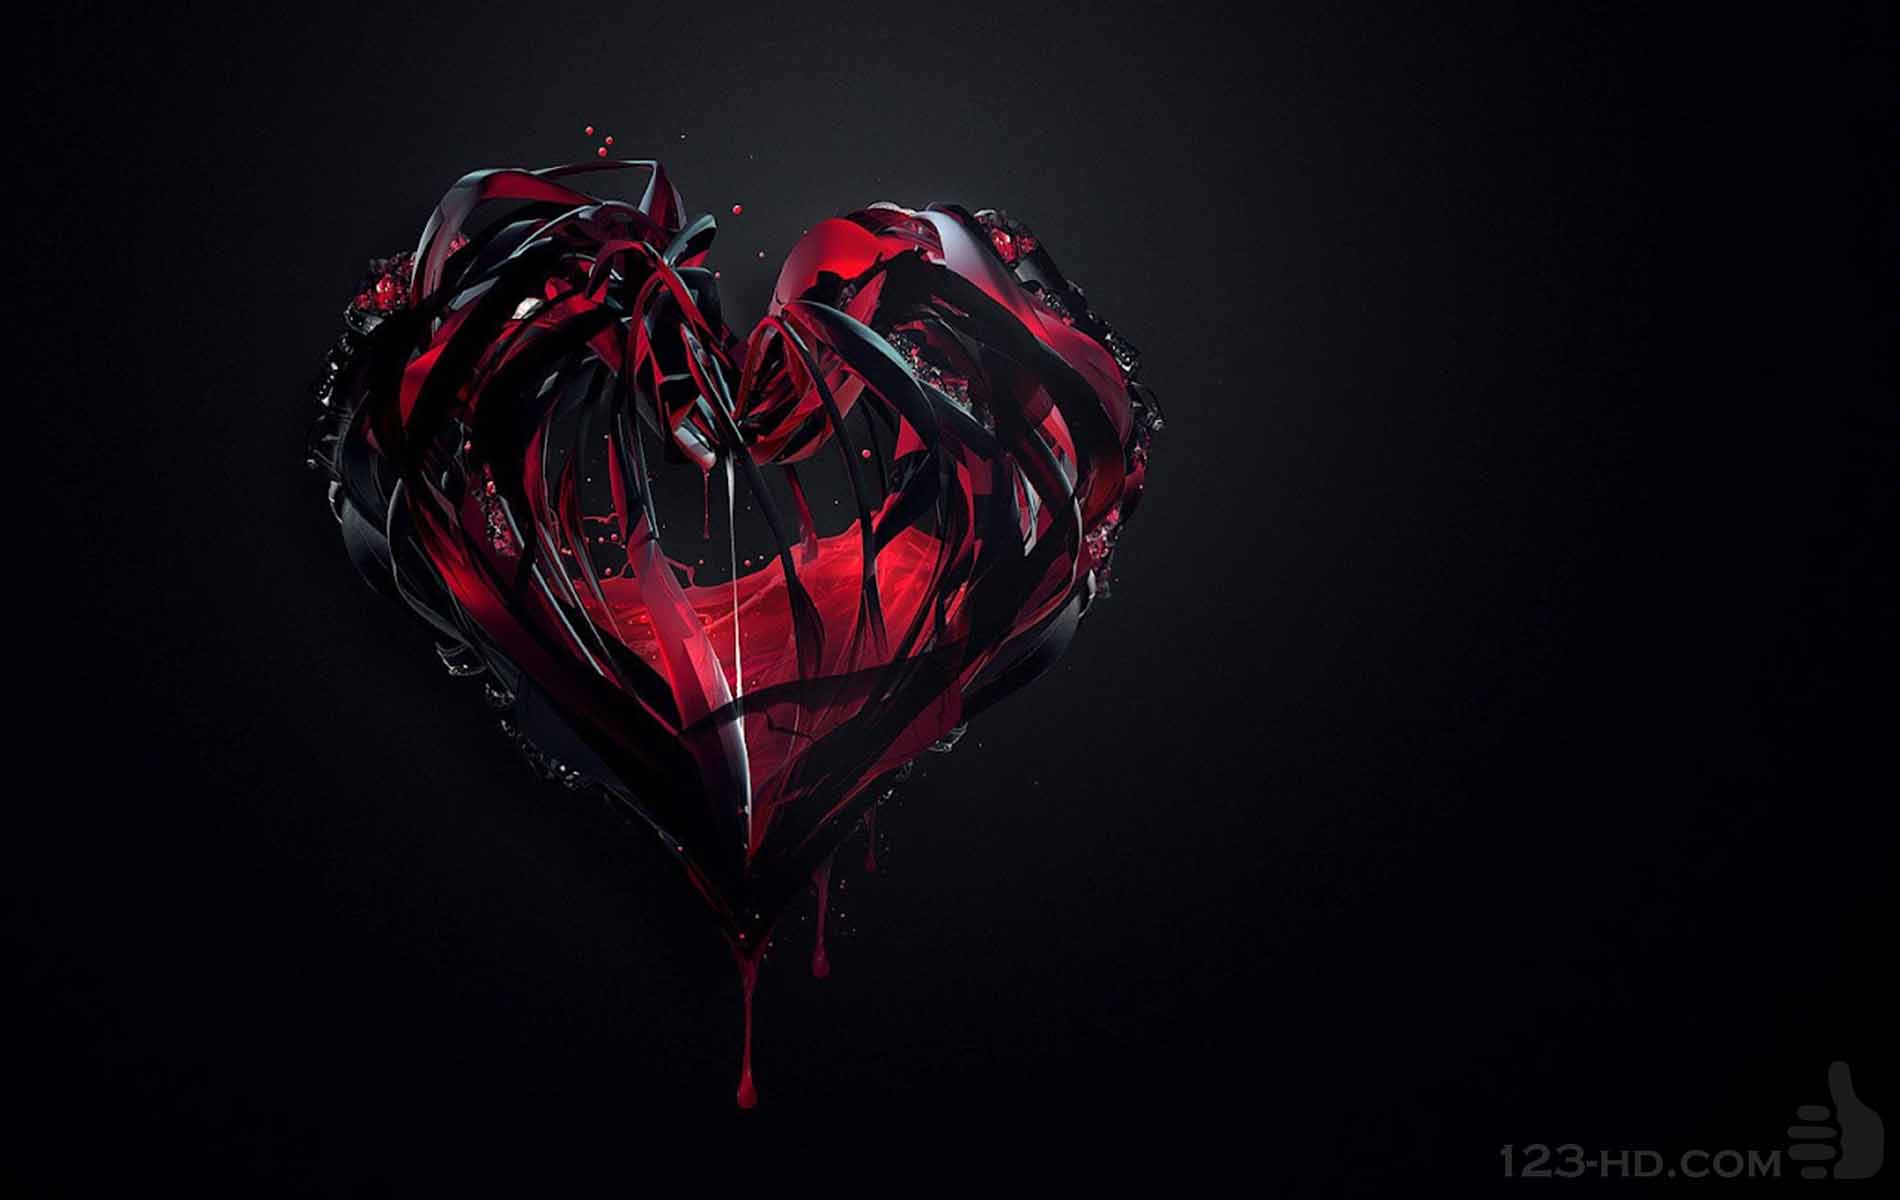 Love Black Heart Wallpaper Hd : Black Heart Wallpapers Wallpaper Cave - William Sagoonger